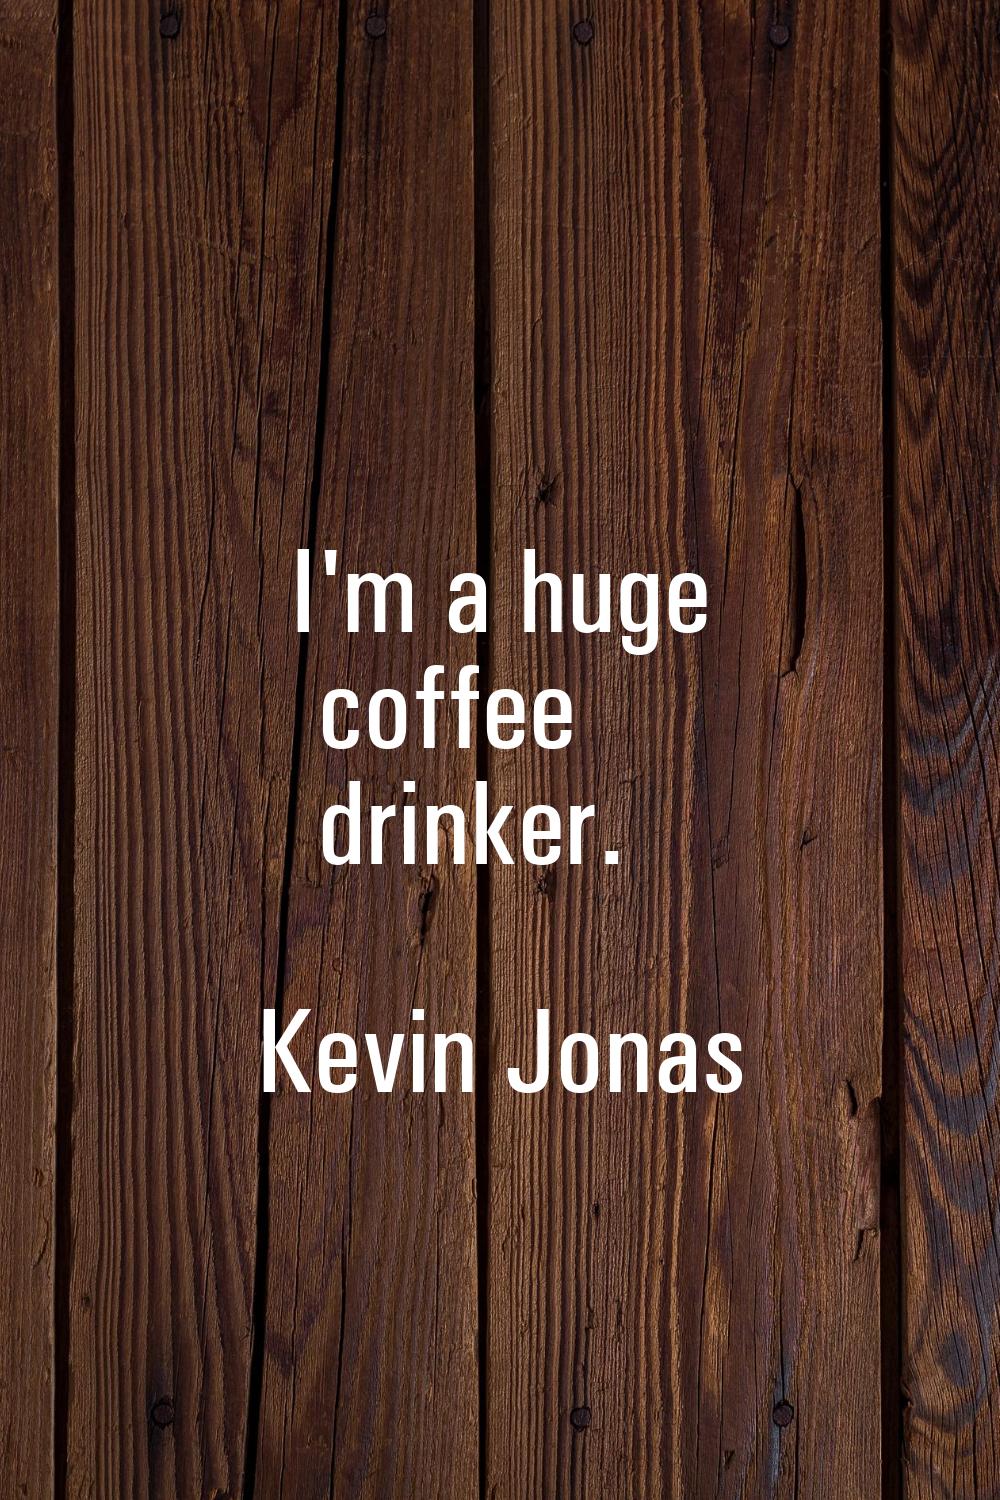 I'm a huge coffee drinker.